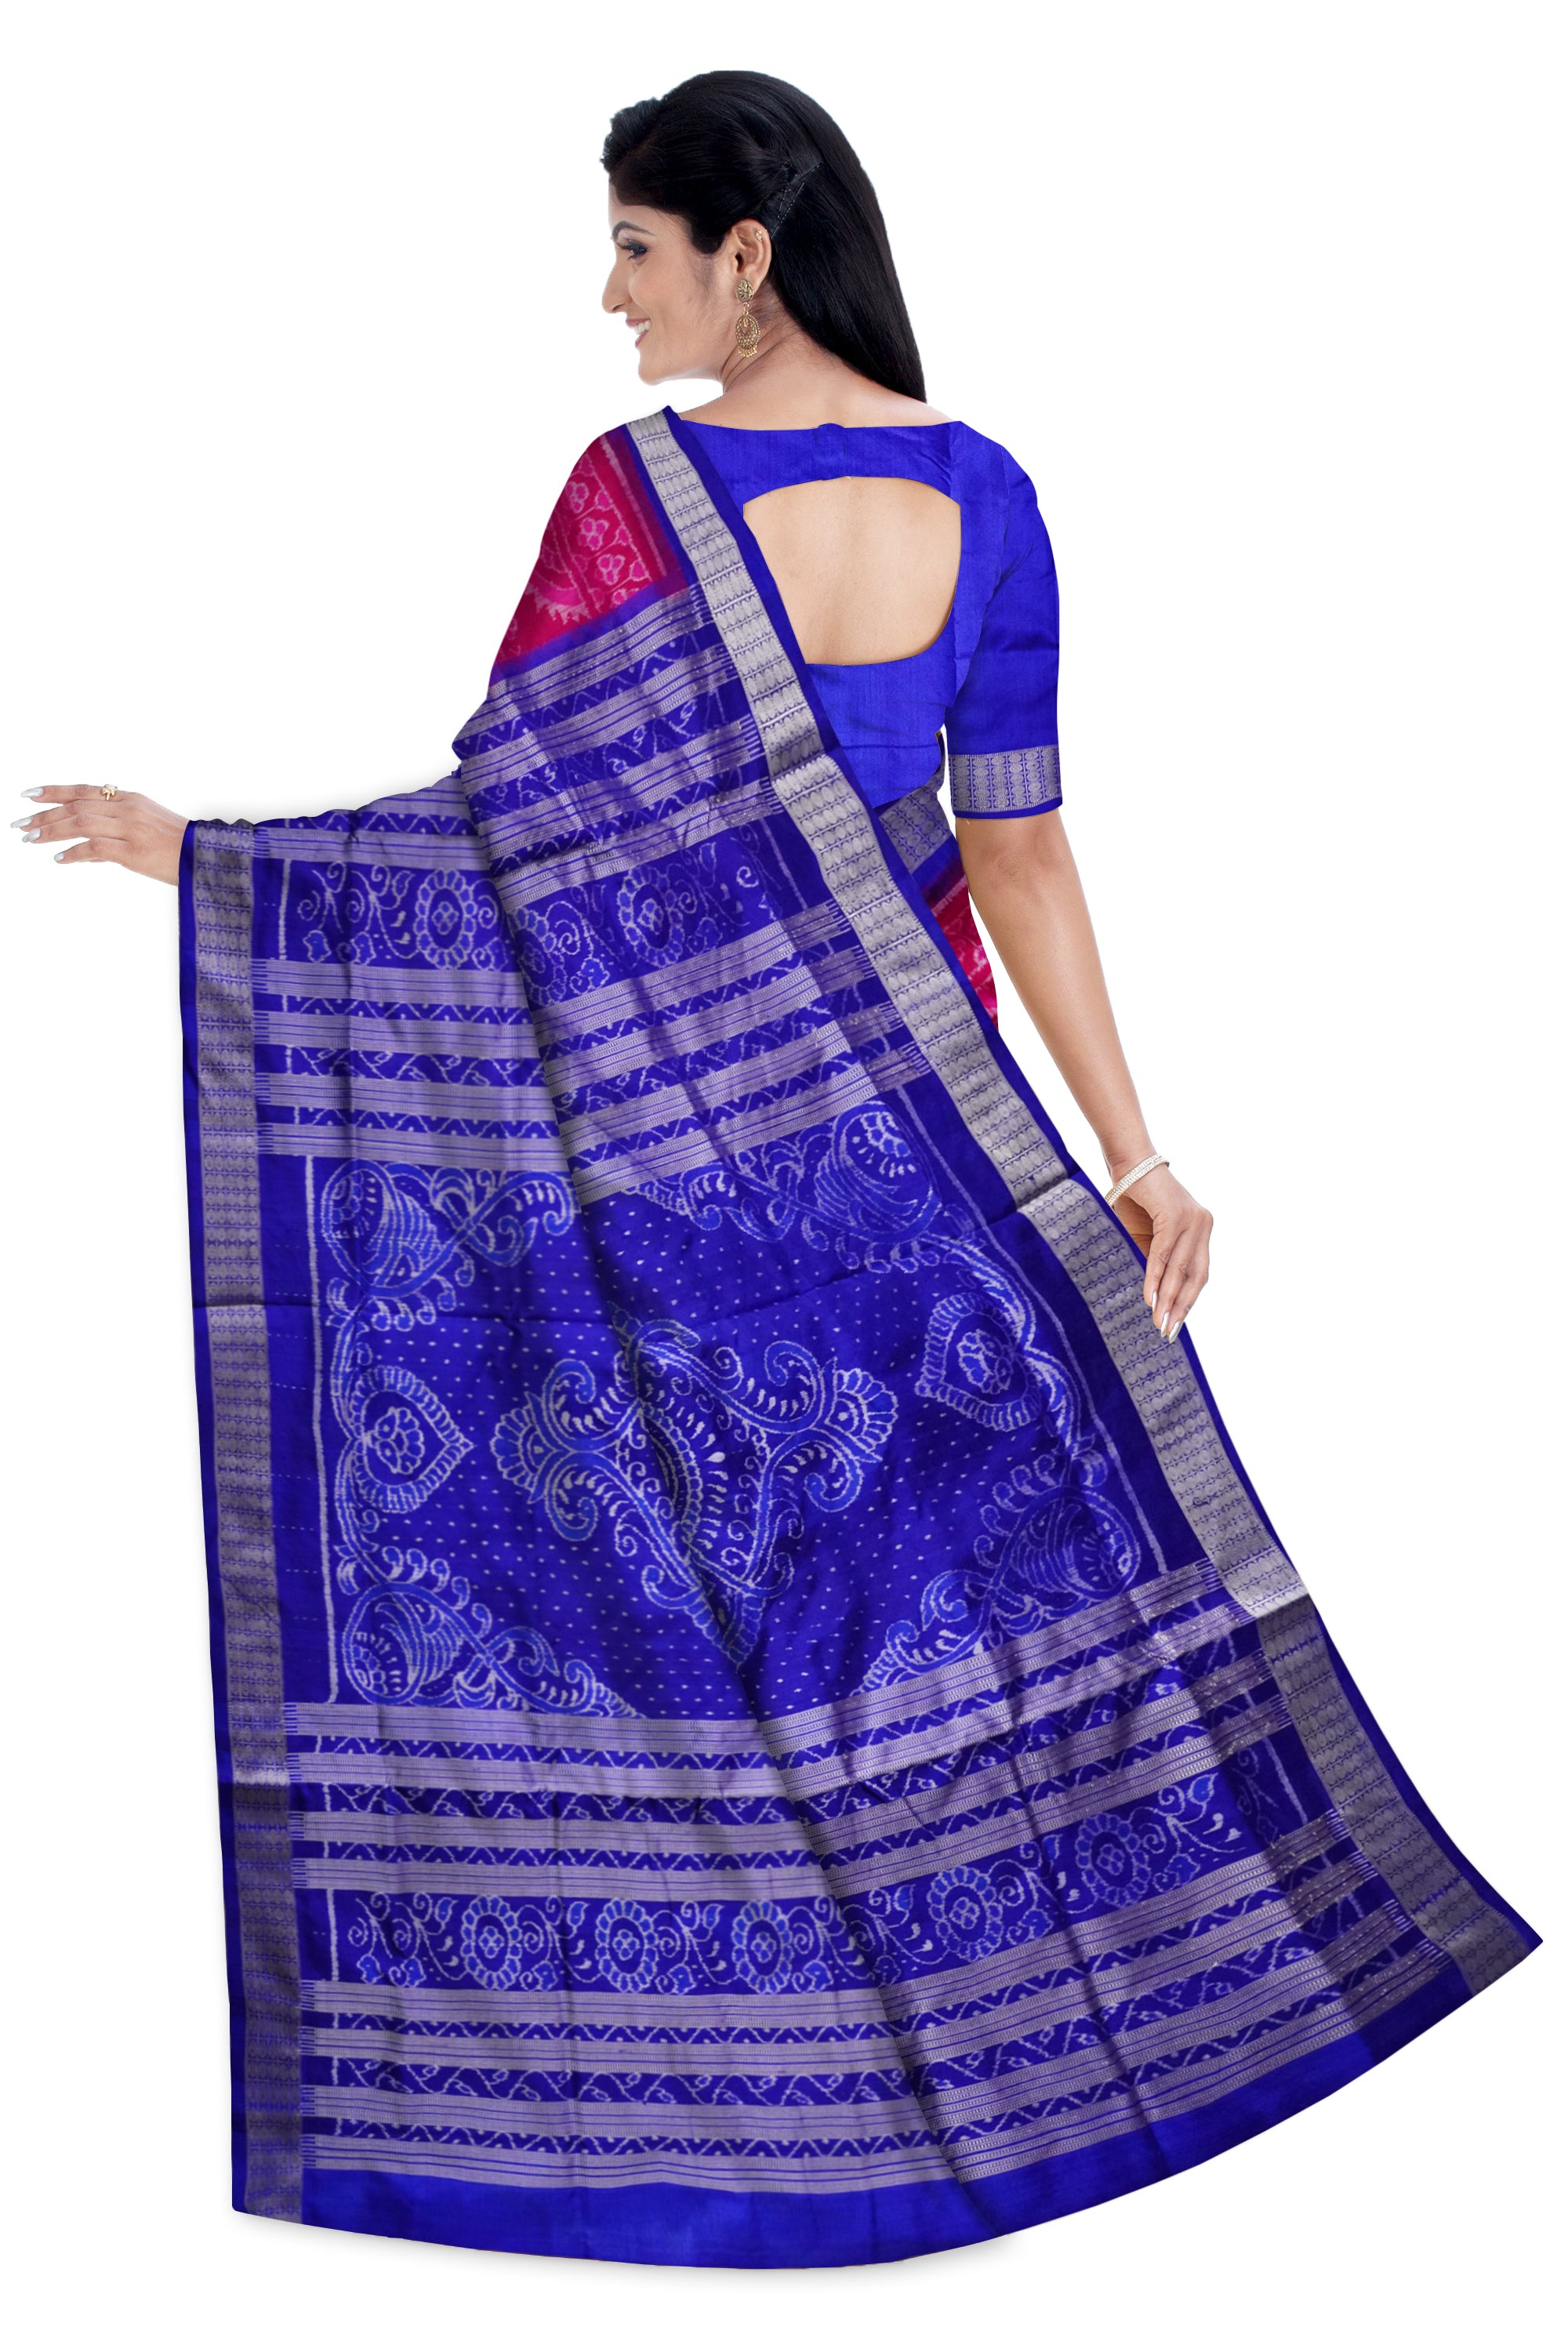 Pink and Blue color Tajmahal pattern sambalpuri pure pata saree. - Koshali Arts & Crafts Enterprise